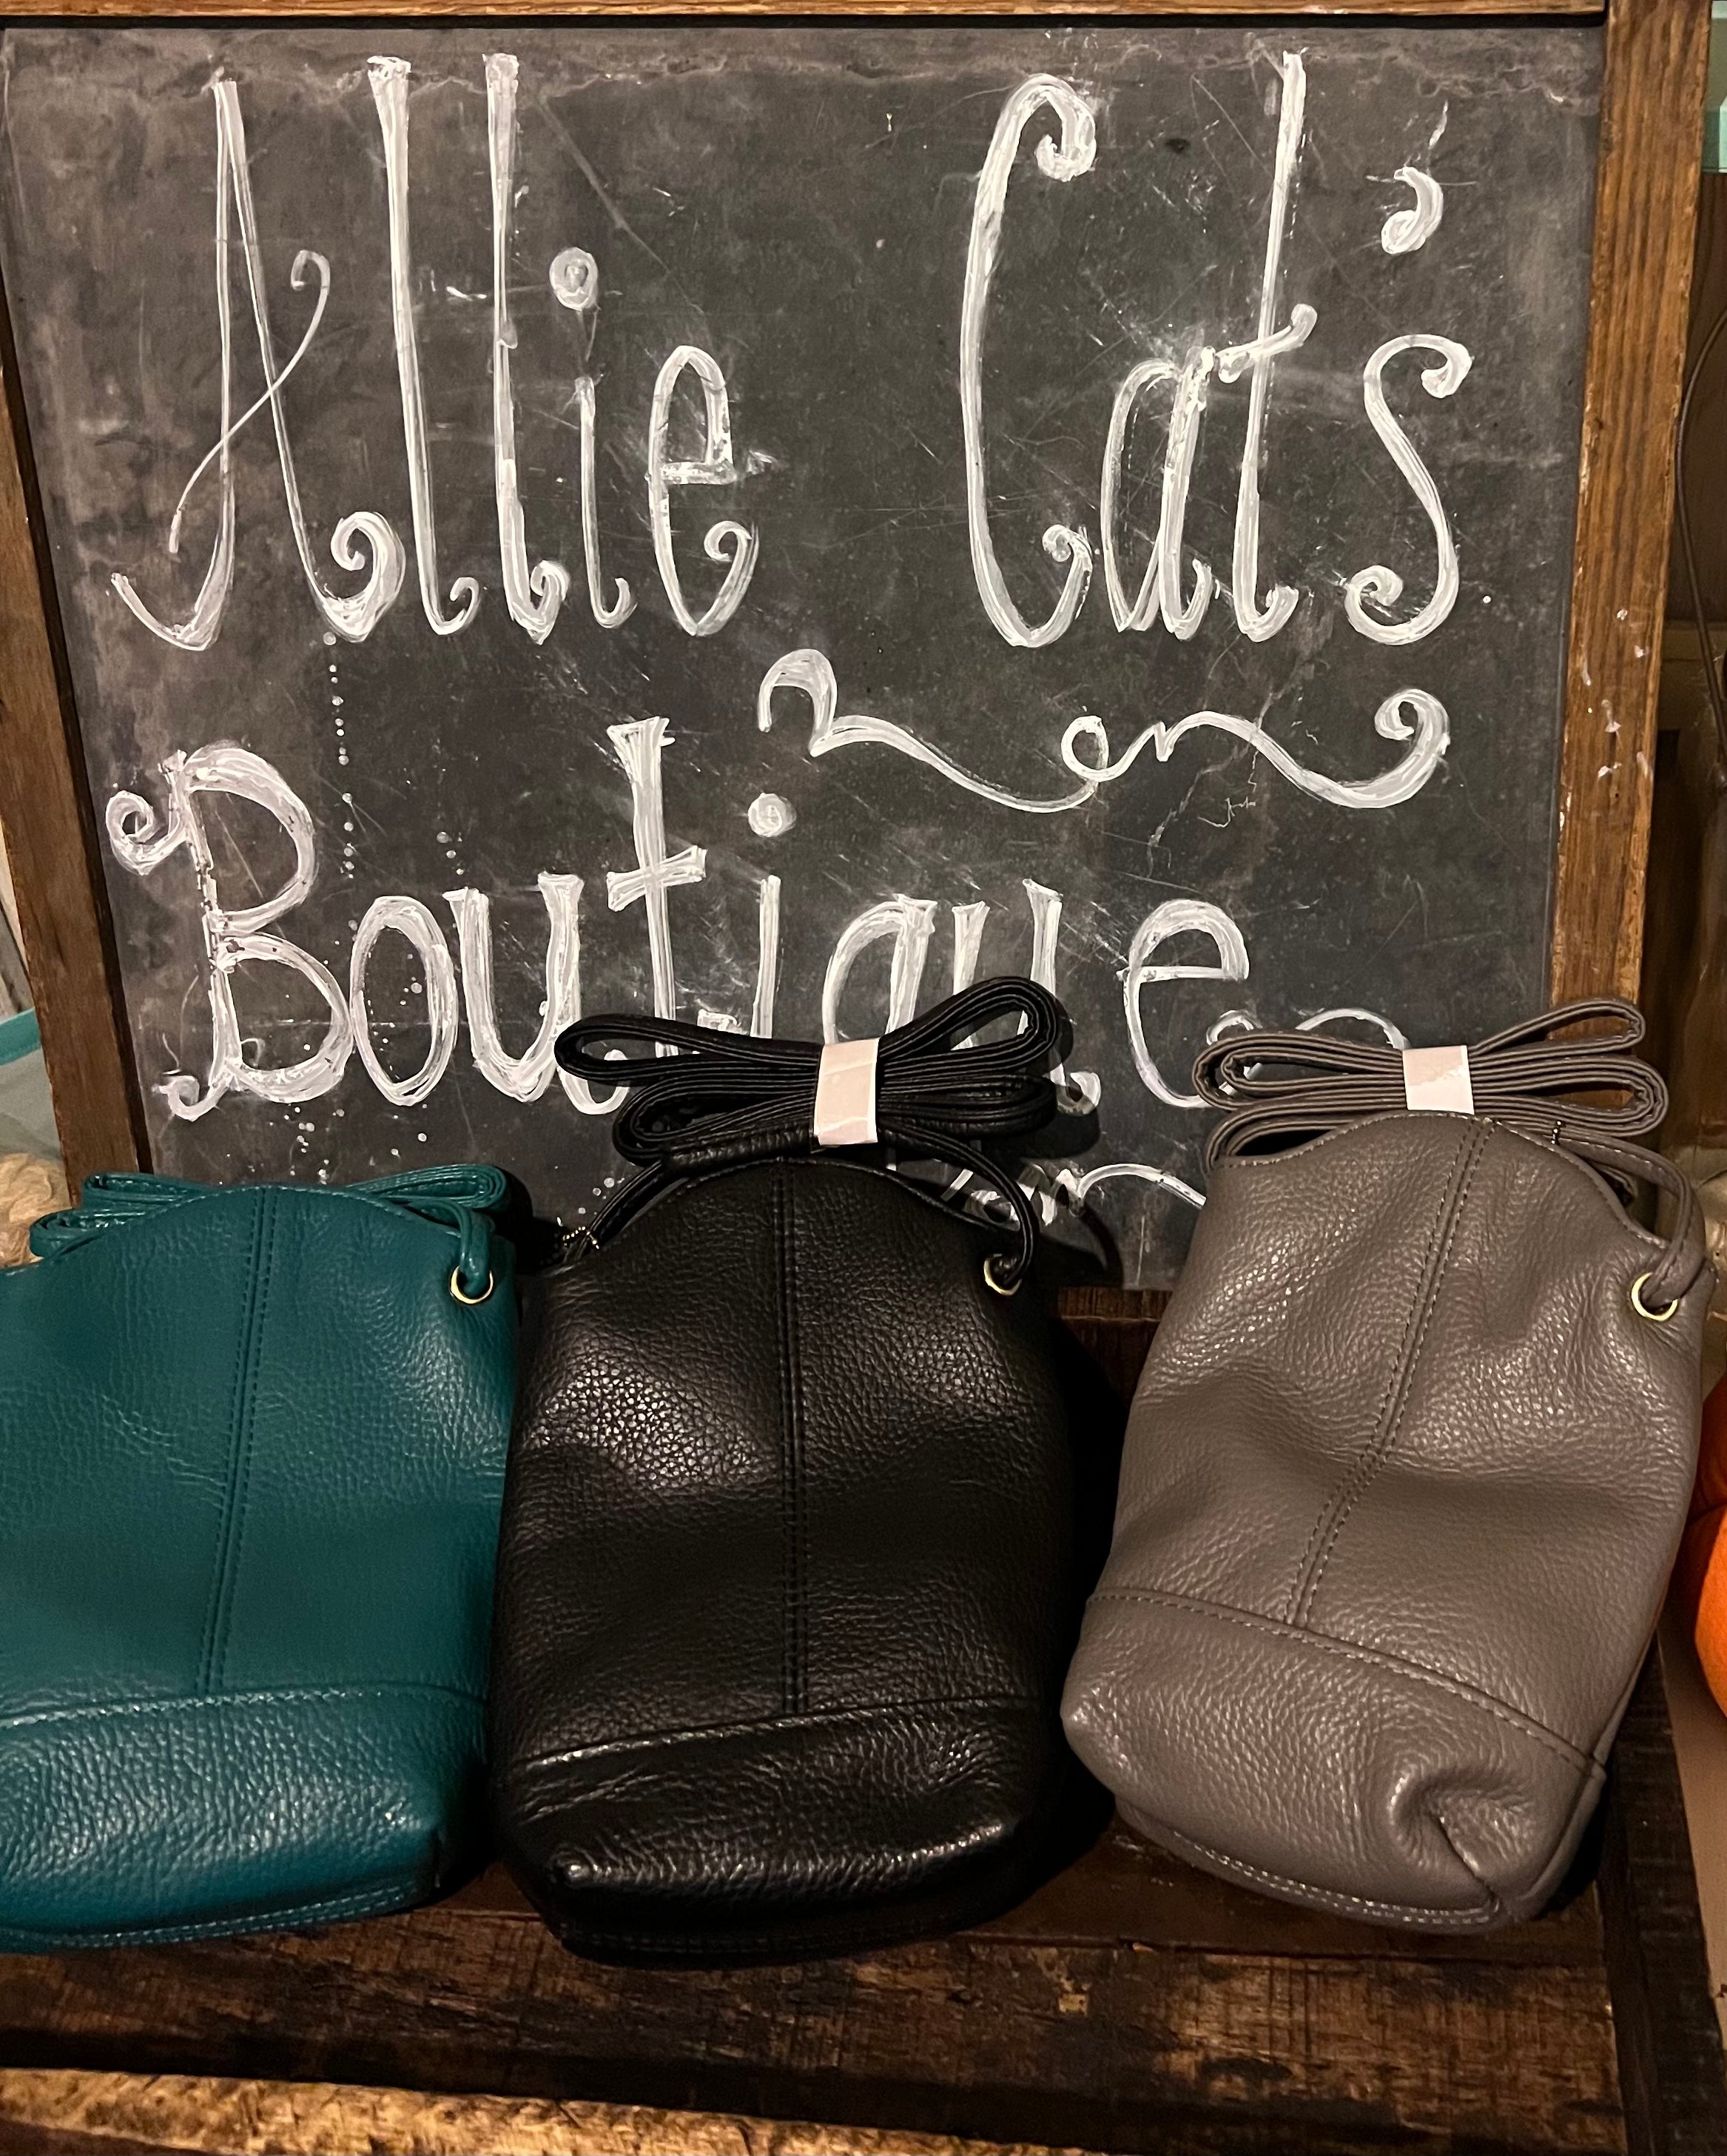 Trapezoidal cow leather handbag - Shop cowa-boutique Handbags